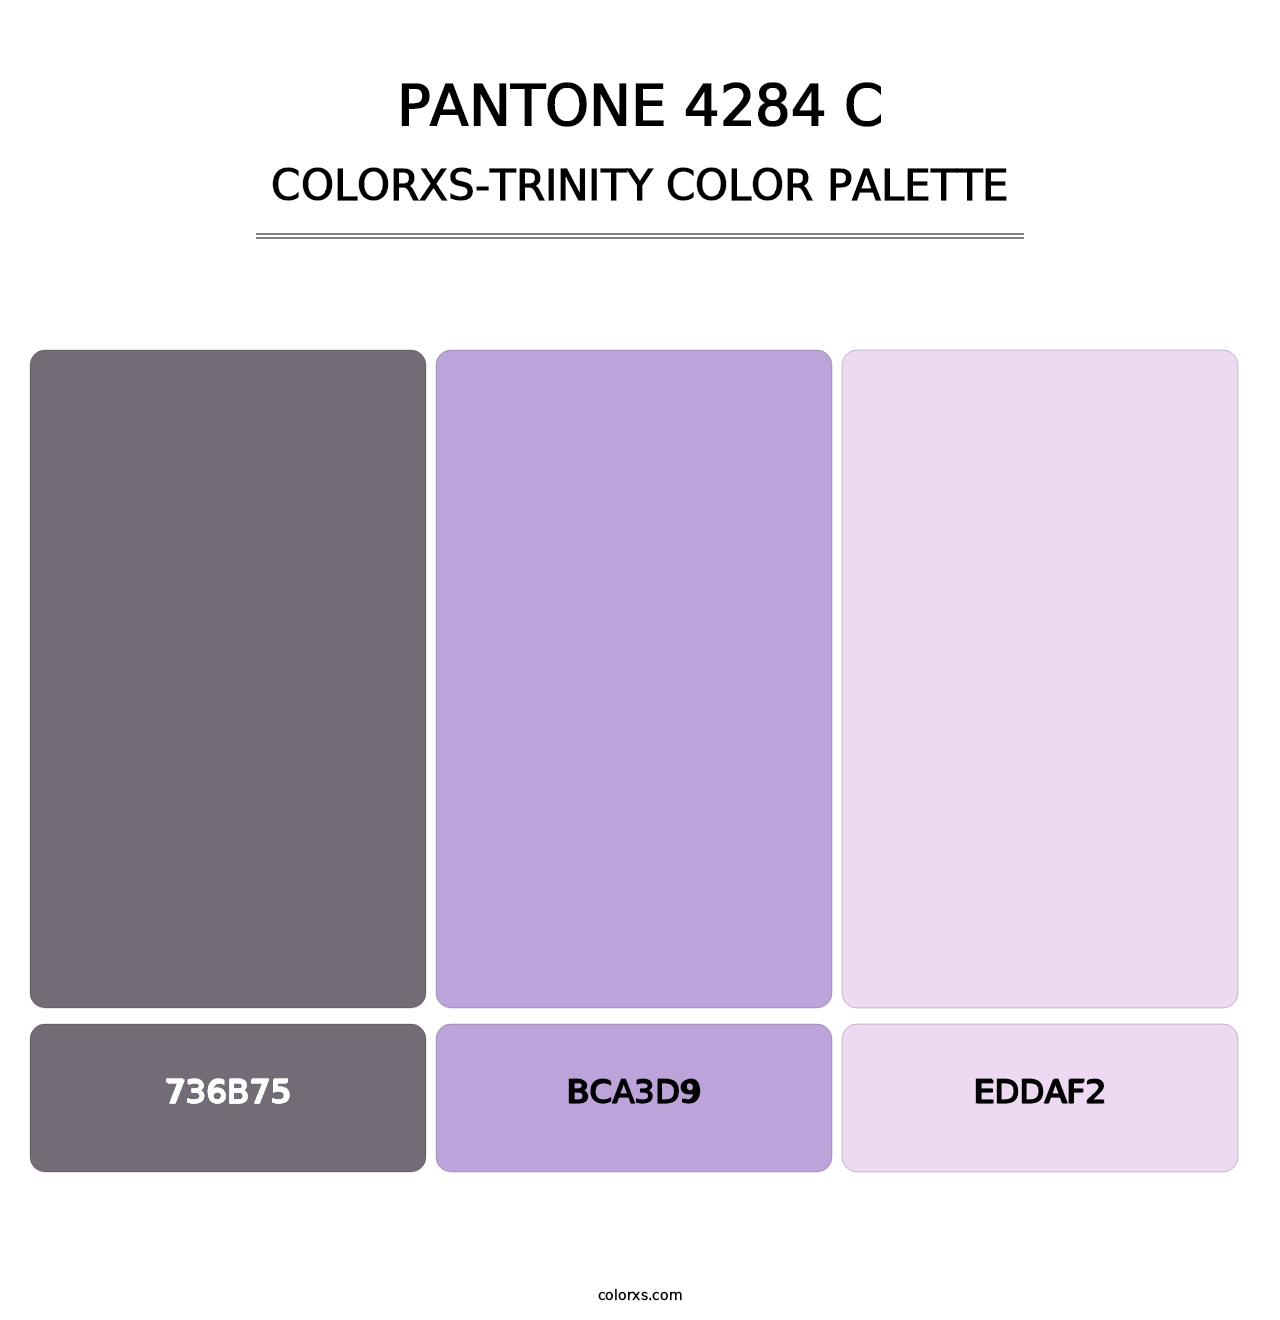 PANTONE 4284 C - Colorxs Trinity Palette